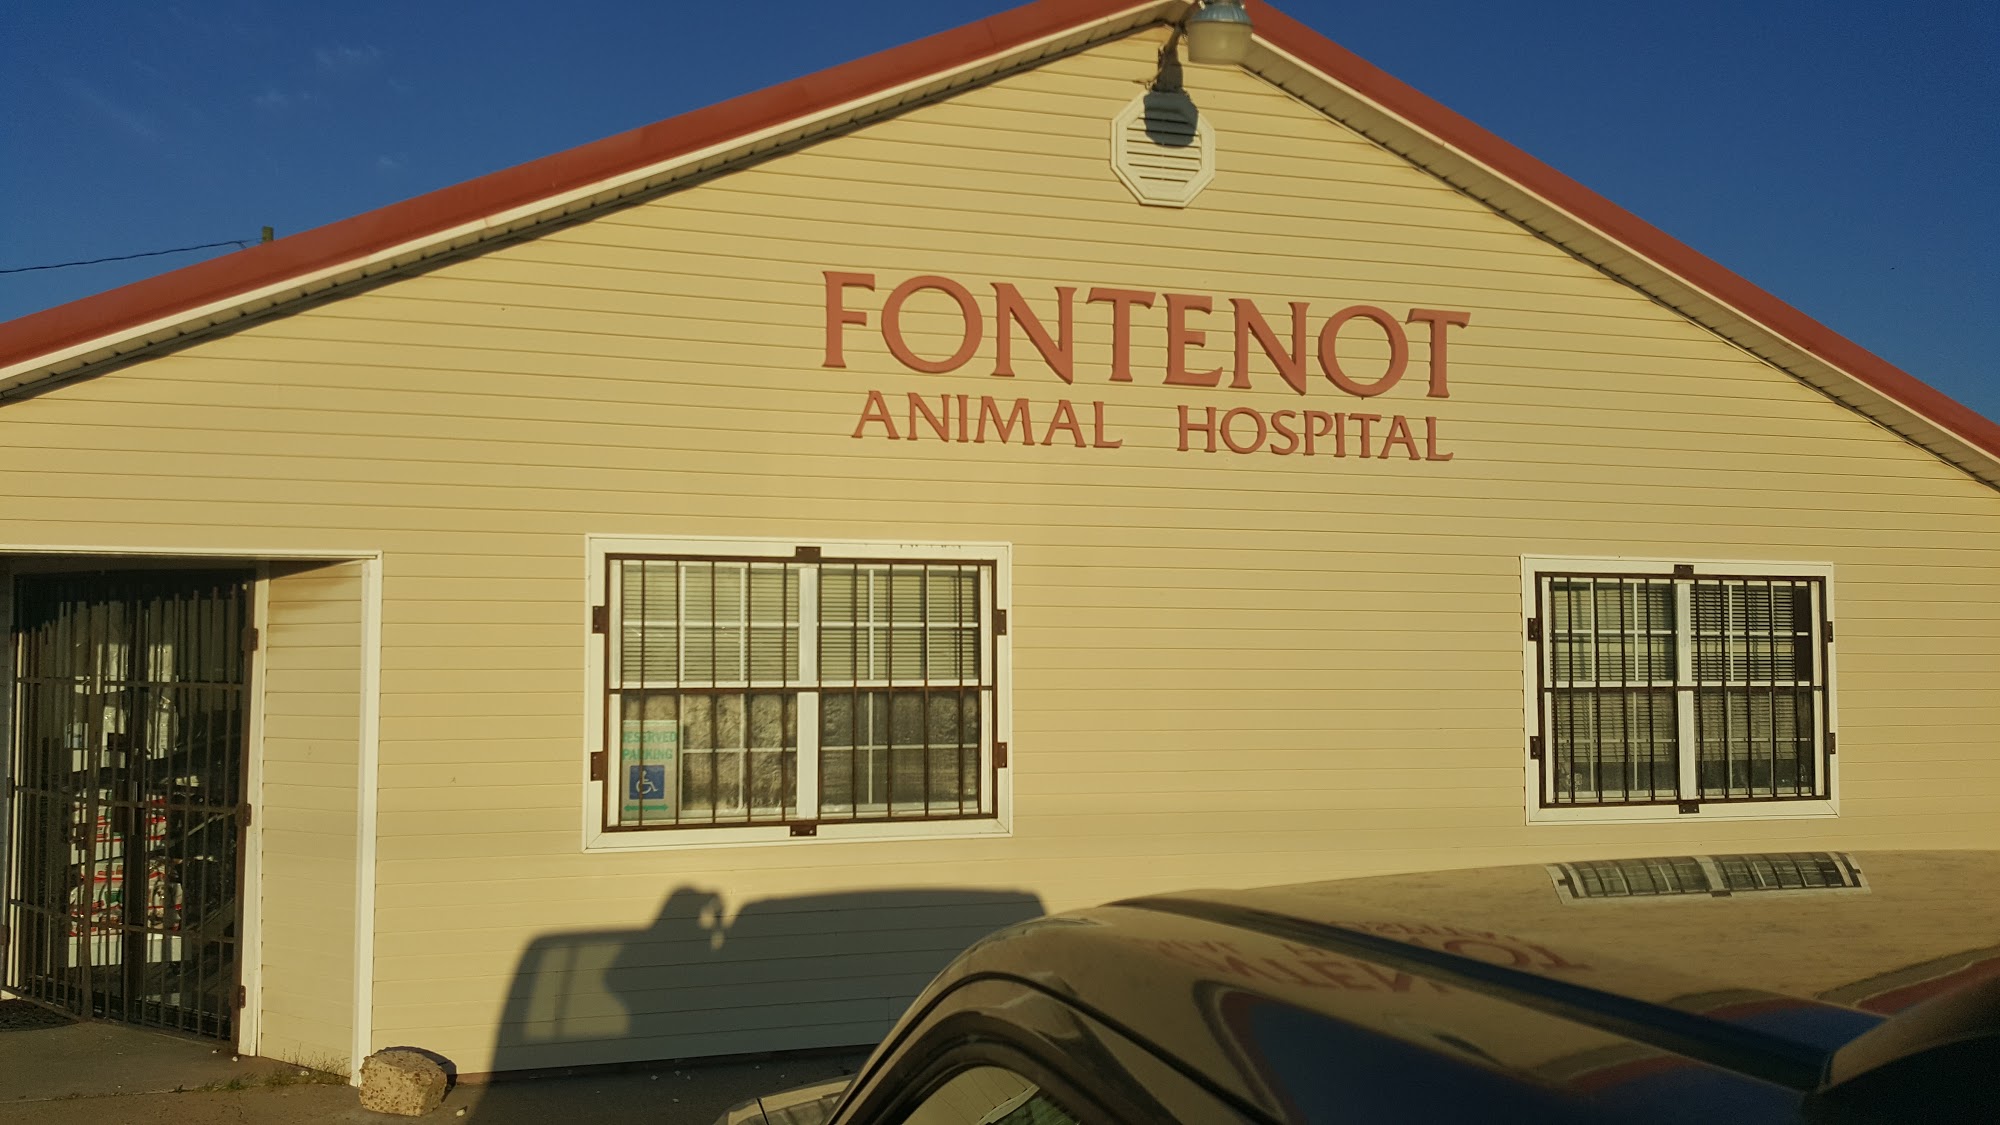 Fontenot Animal Hospital